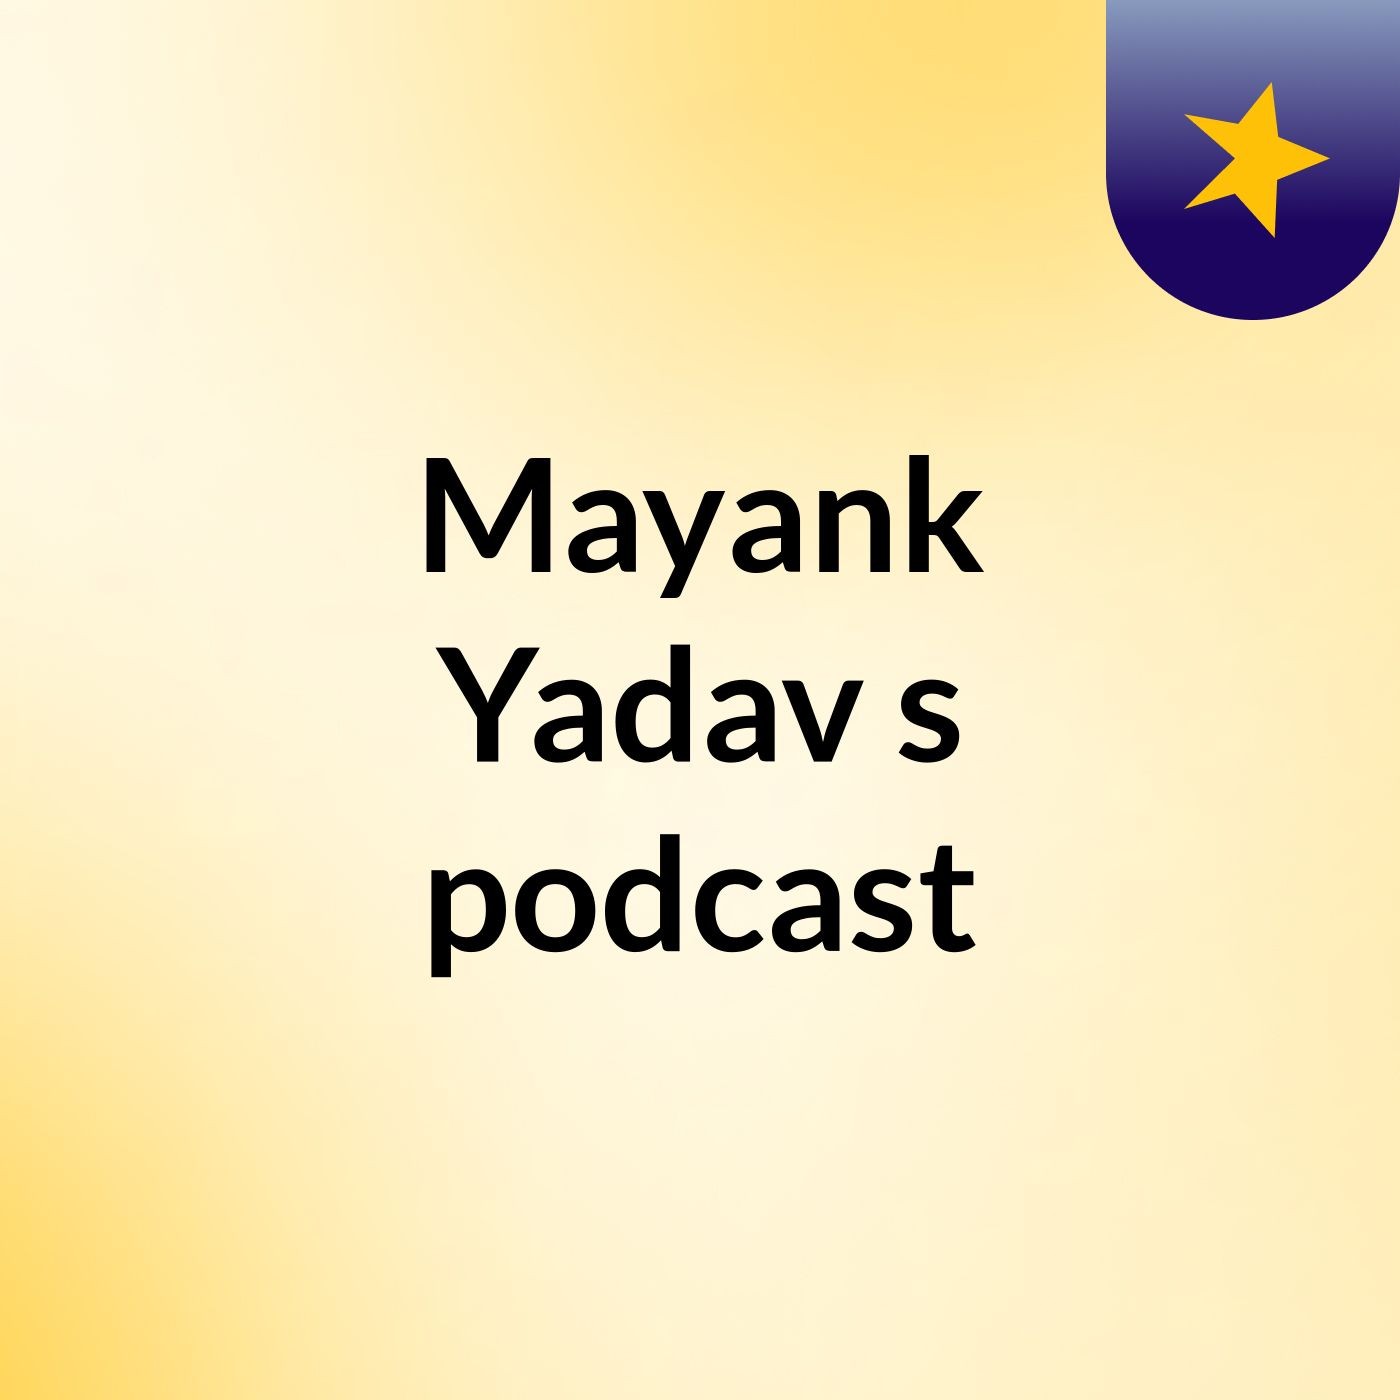 Episode 5 - Mayank Yadav's podcast